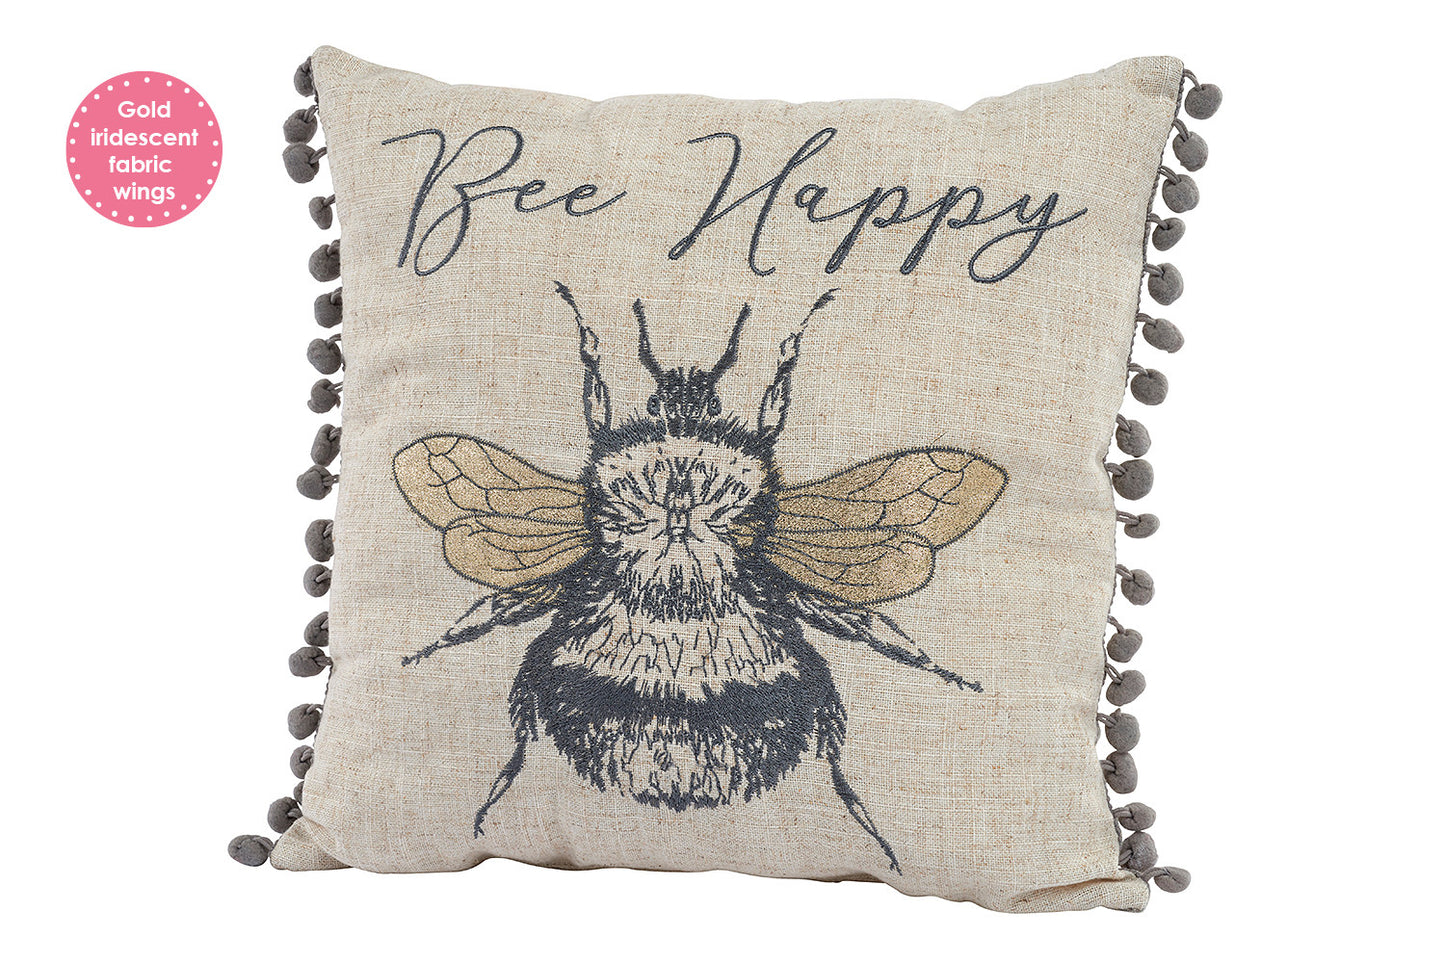 Bee Happy Cushion